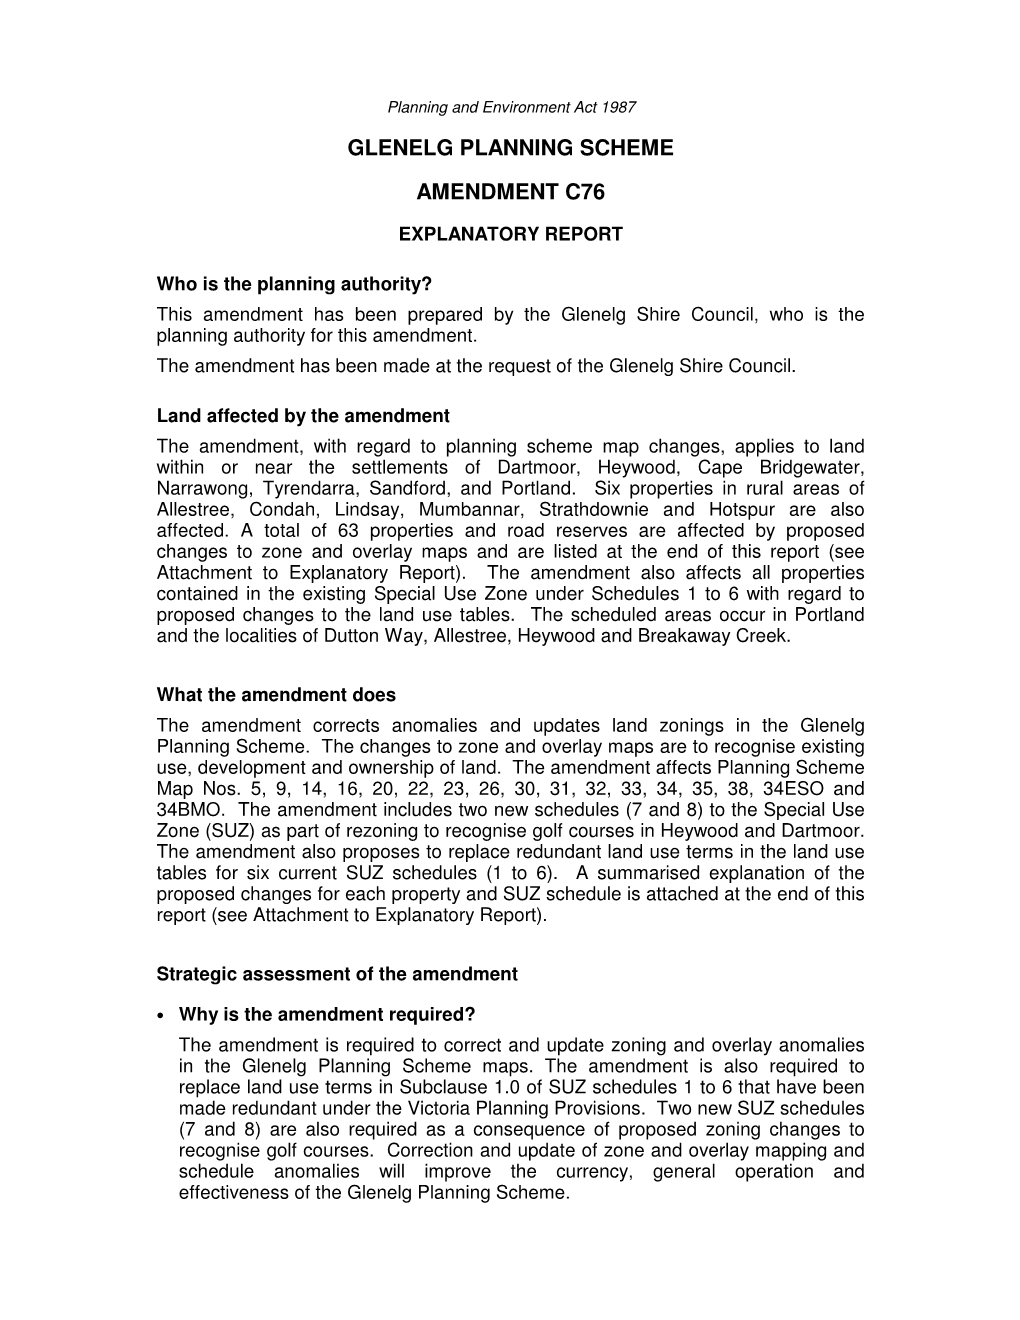 Glenelg Planning Scheme Amendment